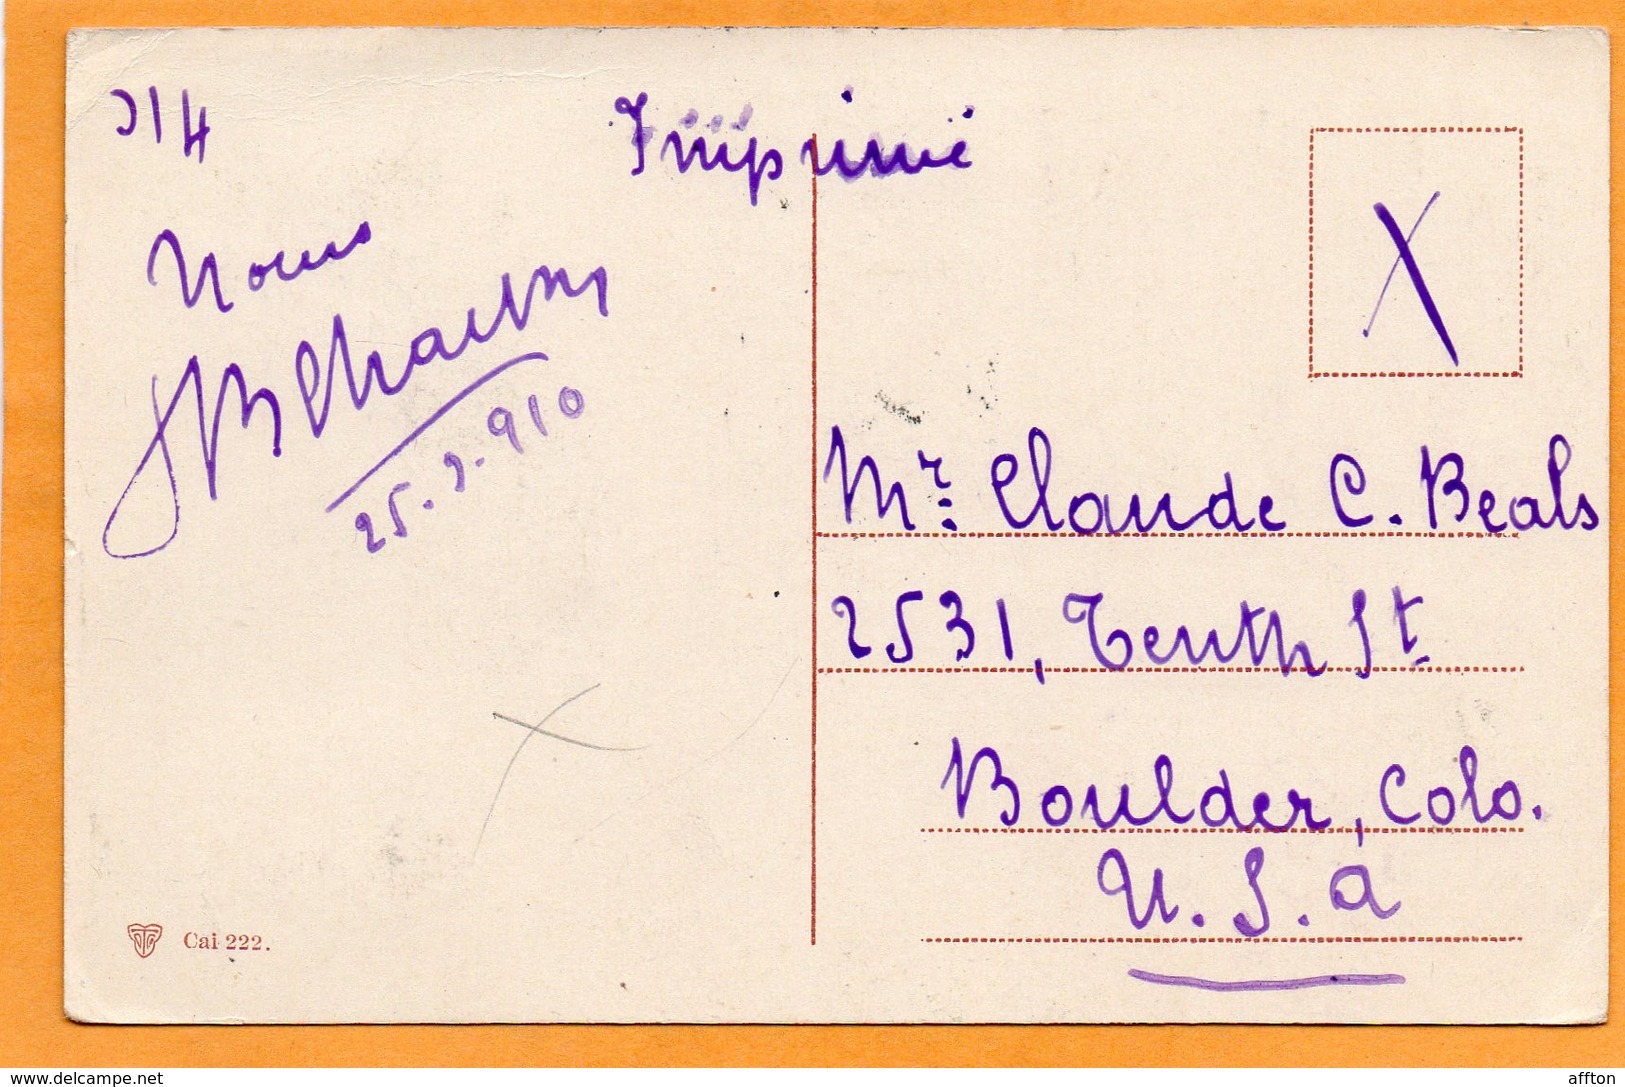 Cairo Egypt 1911 Postcard Mailed - Cairo